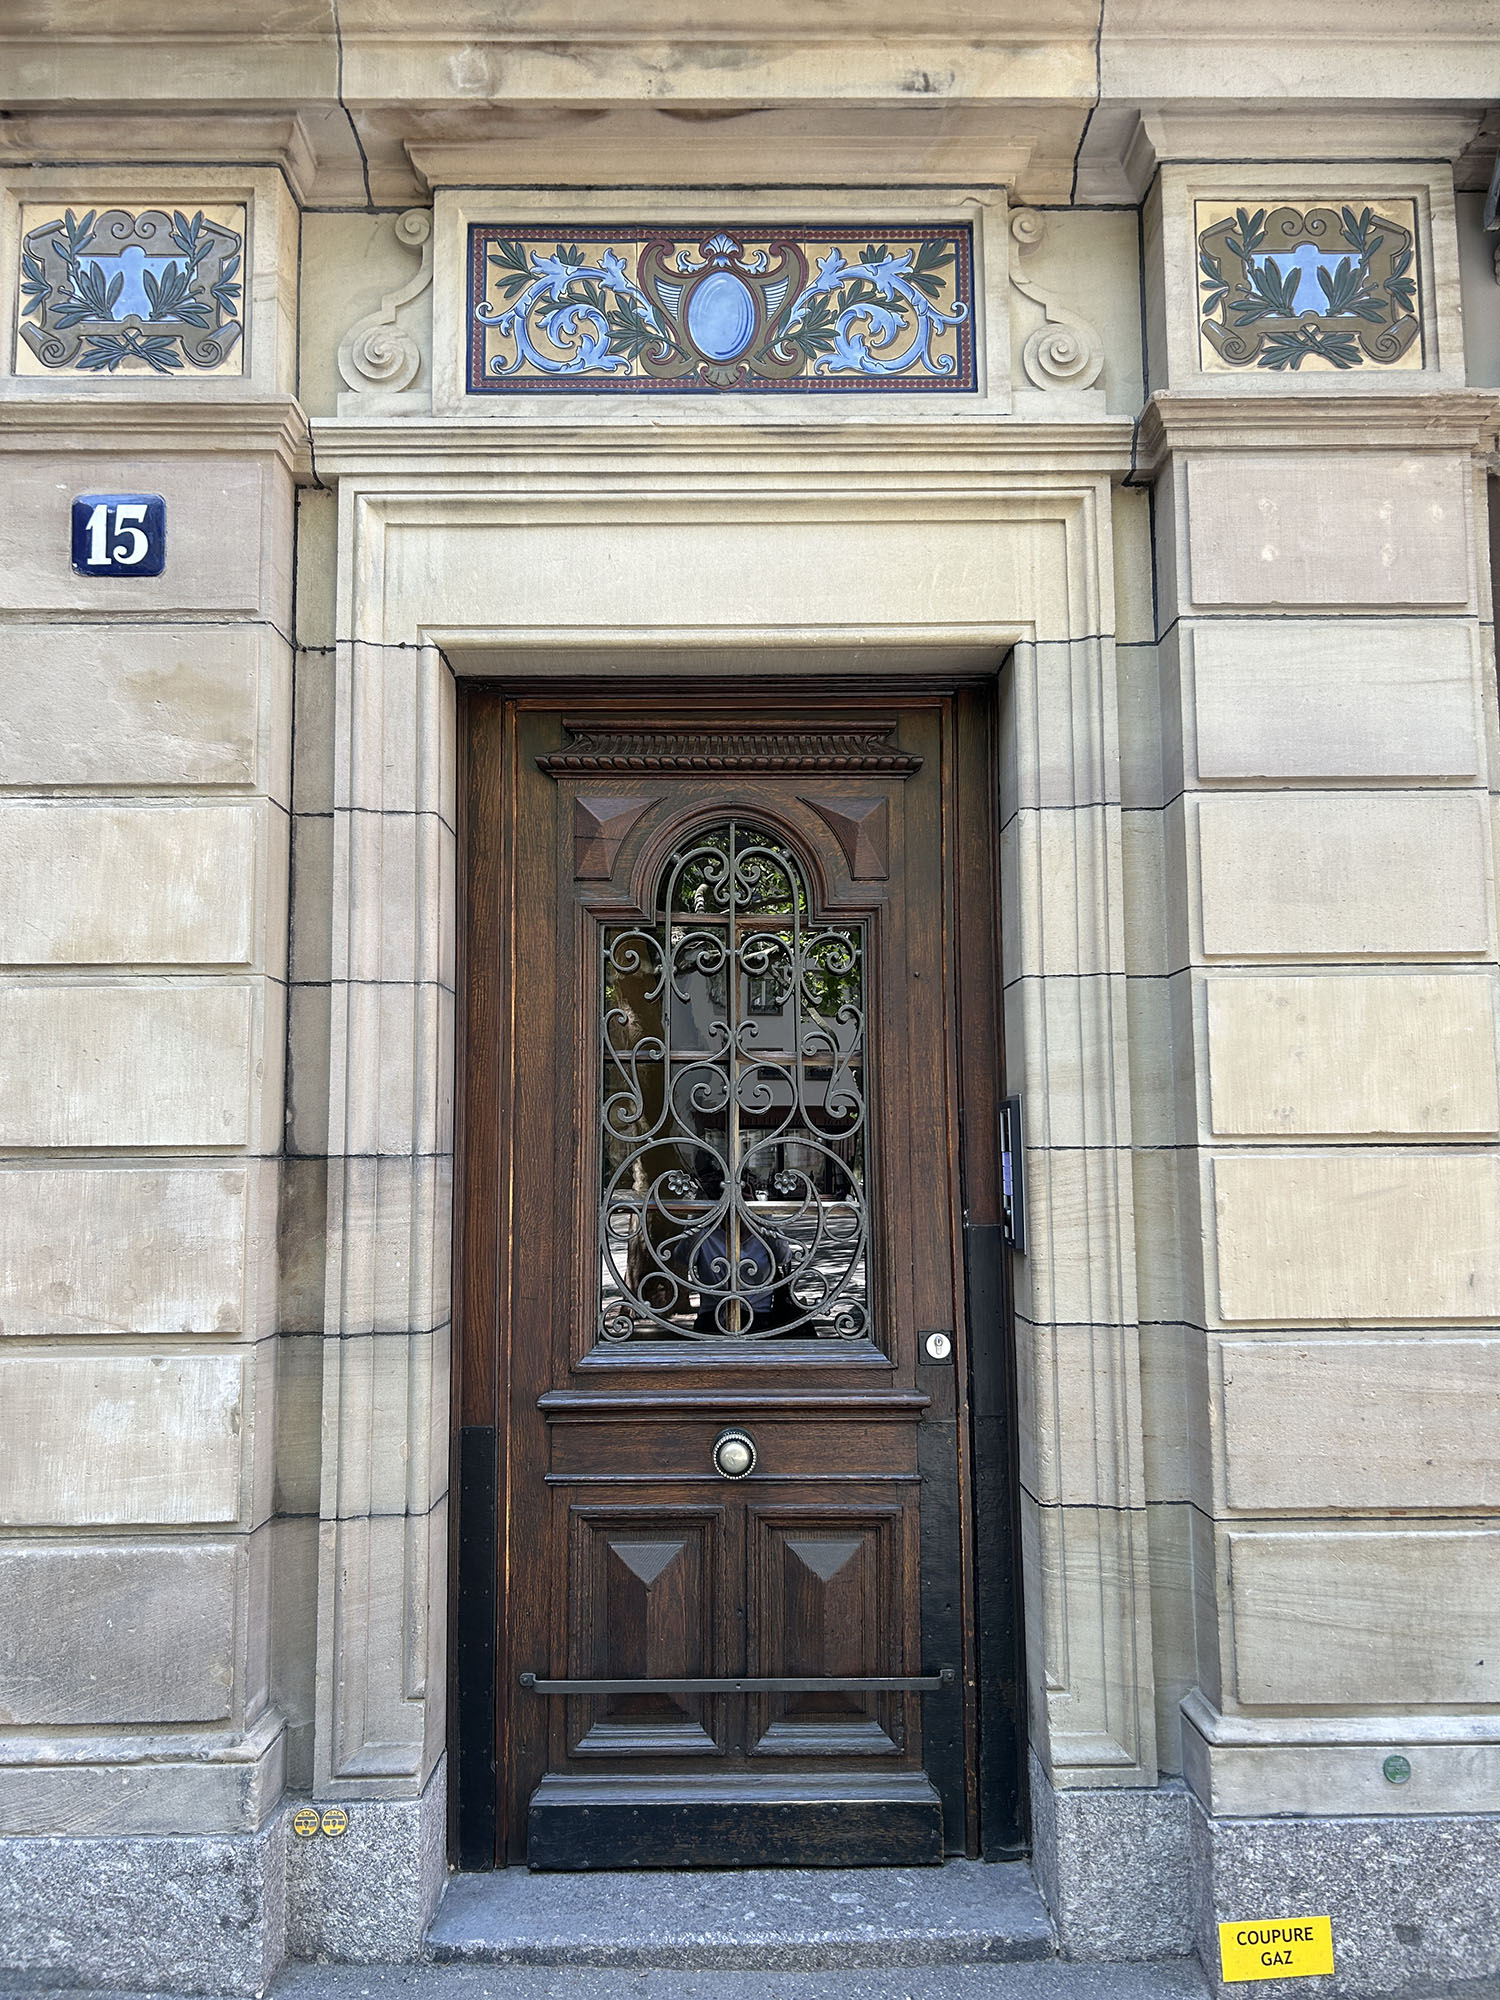 Coco & Voltaire - Art nouveau doorway in Strasbourg, France